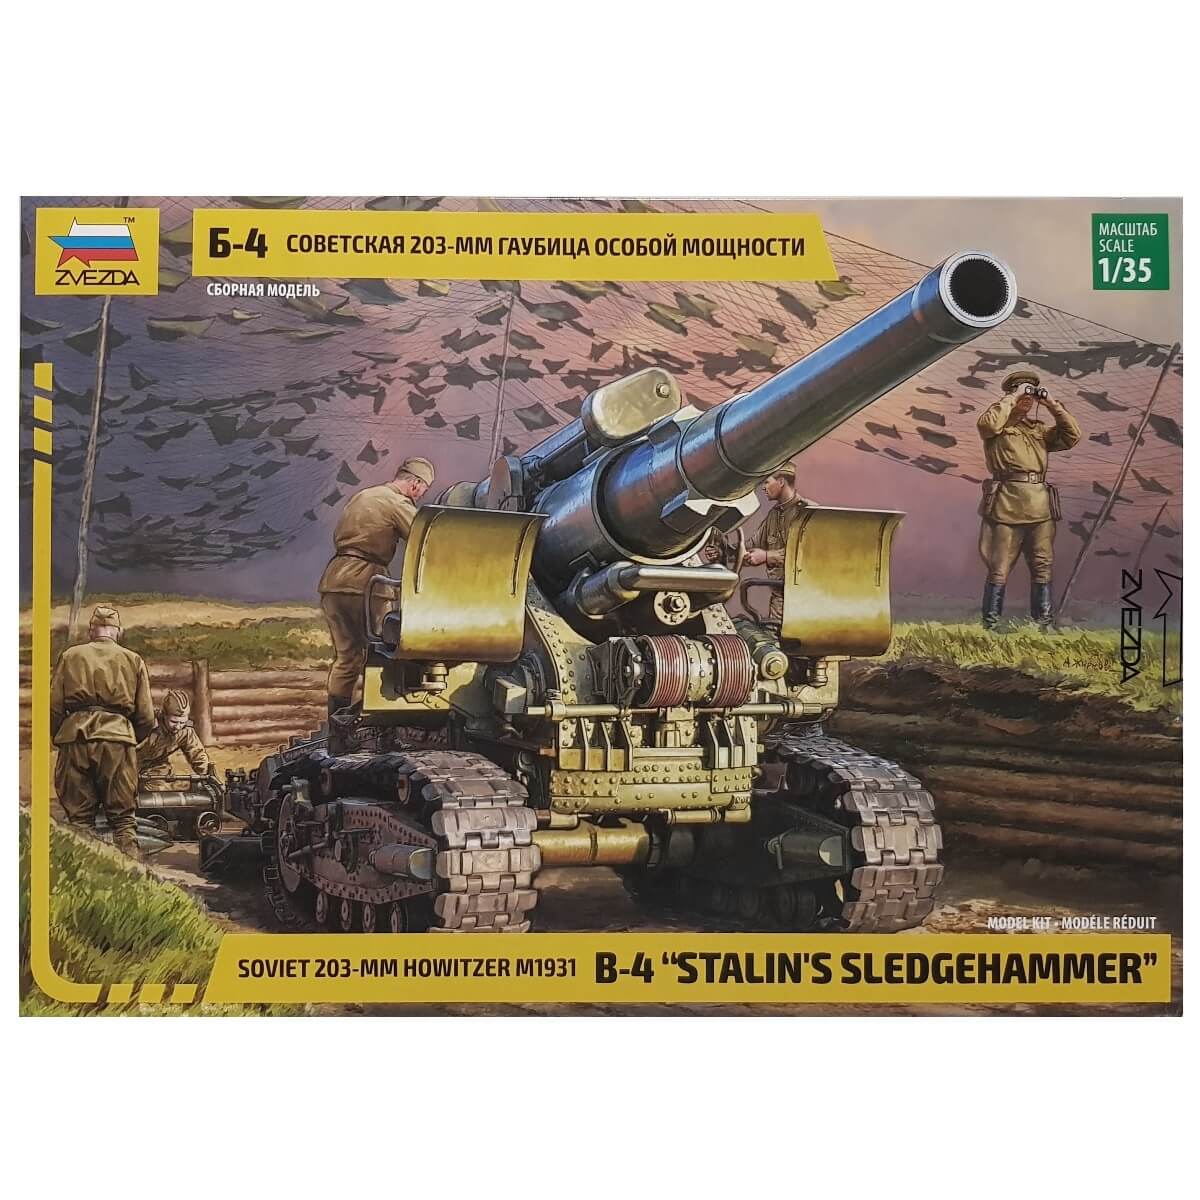 1:35 B-4 Soviet 203mm Howitzer M1931 - Stalin's Sledgehammer - ZVEZDA